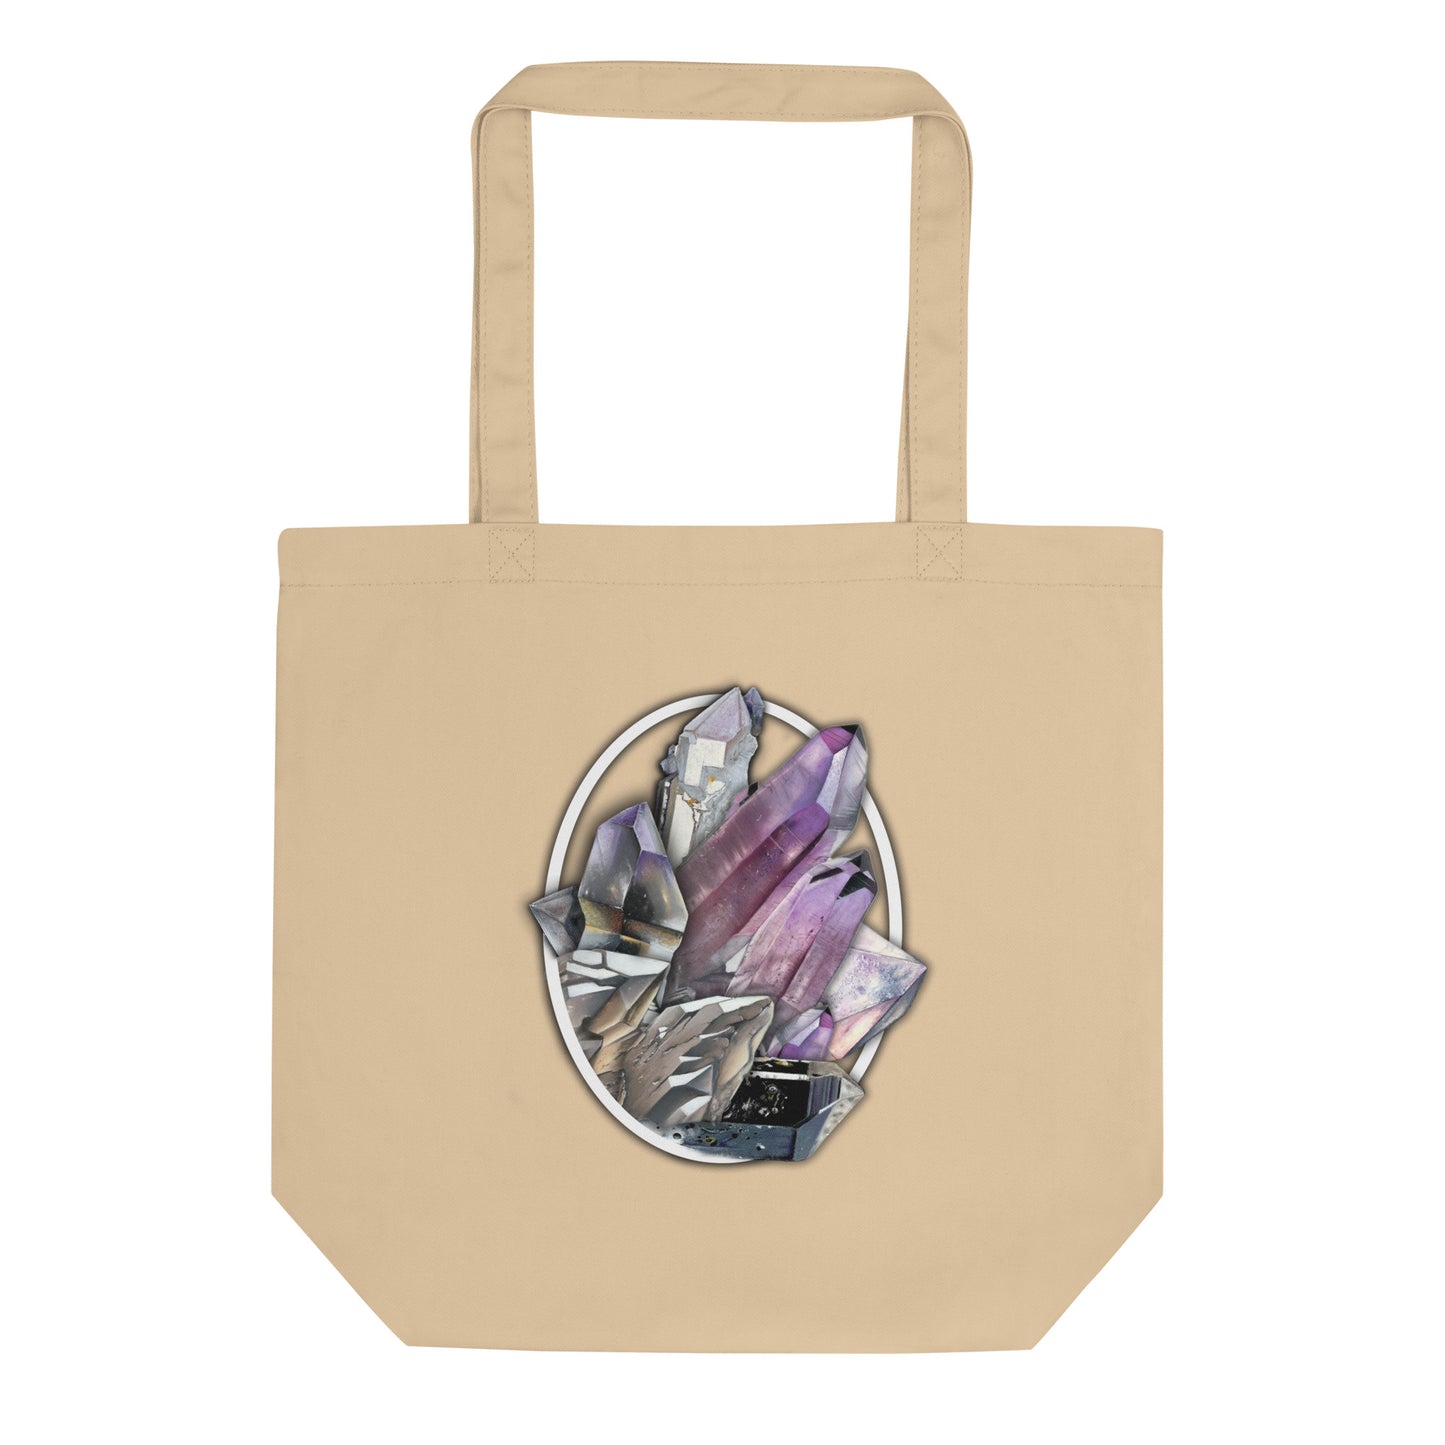 Quartz Collage Oval - Eco Tote Bag